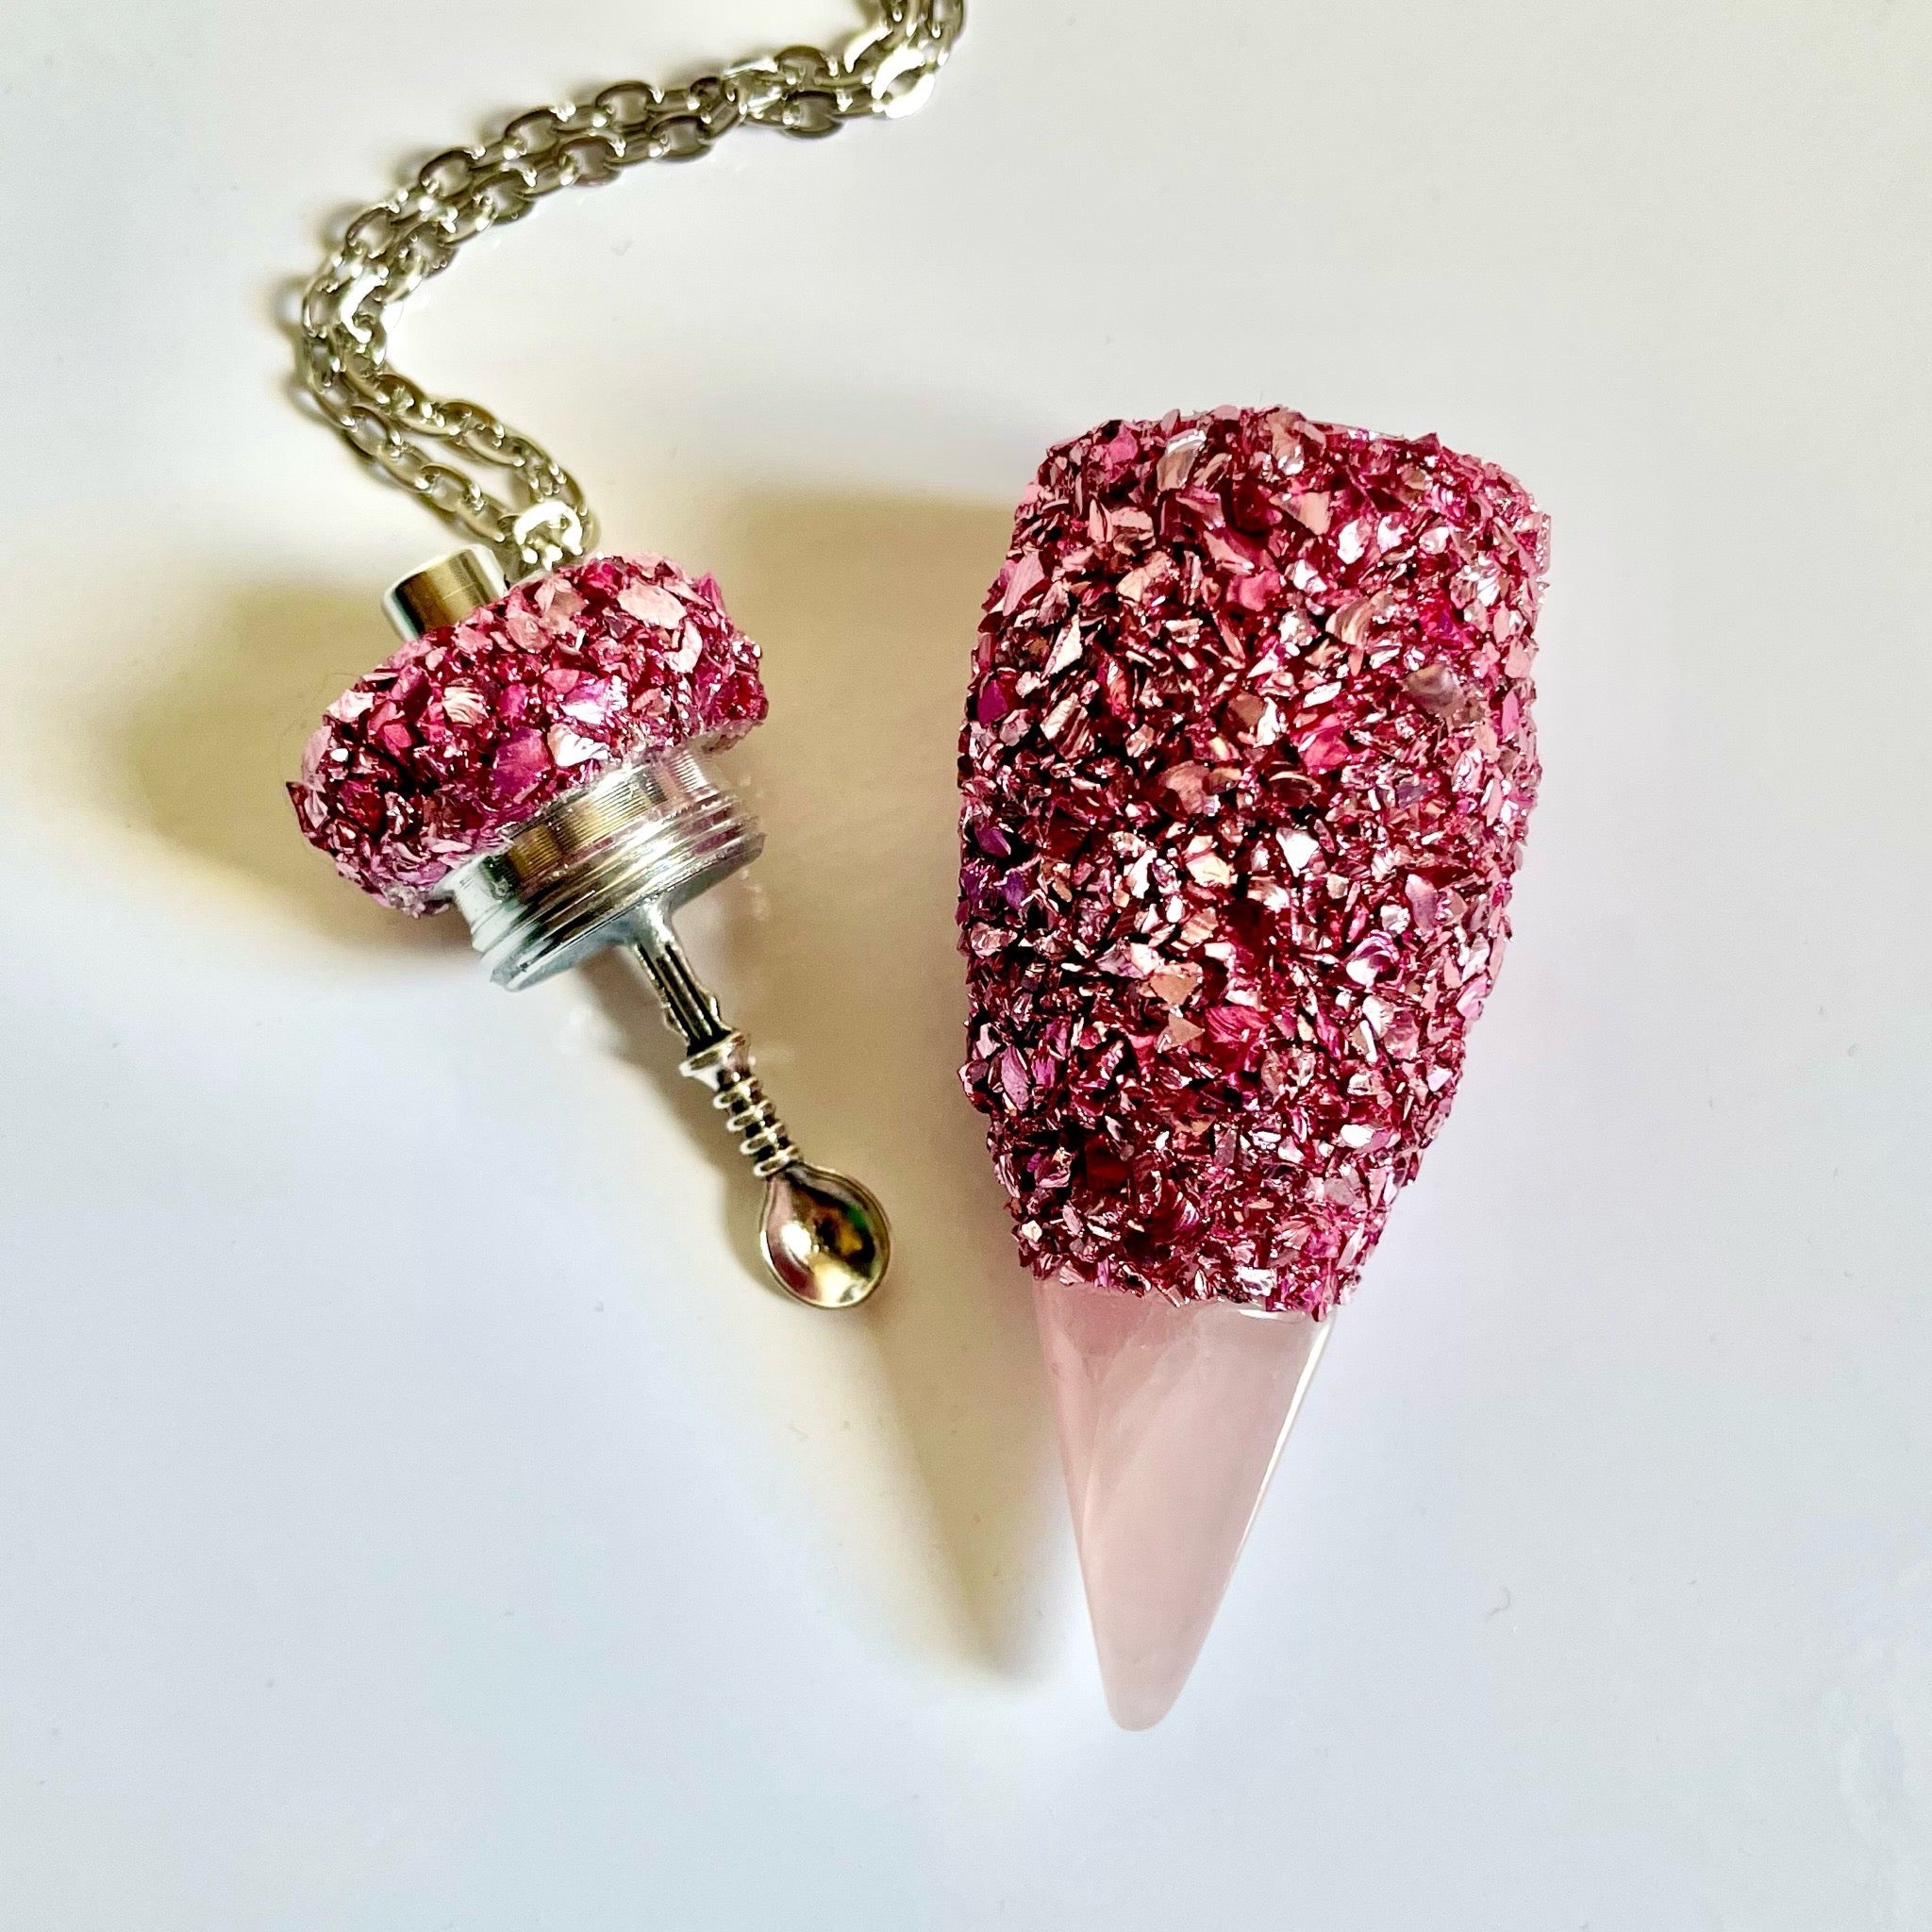 Customized Hidden Spoon Necklace